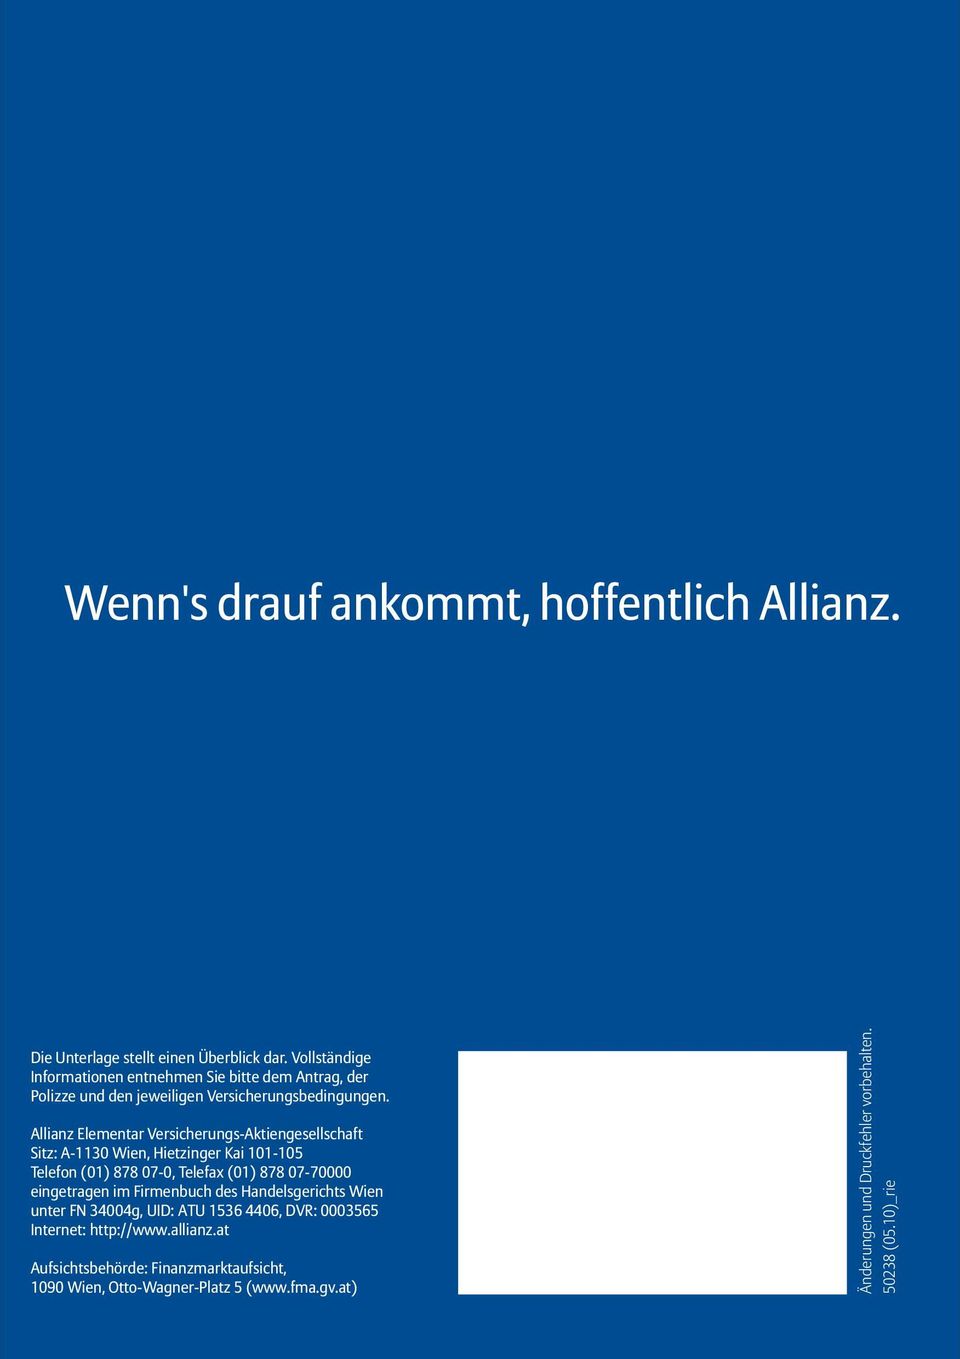 Allianz Elementar Versicherungs-Aktiengesellschaft Sitz: A-1130 Wien, Hietzinger Kai 101-105 Telefon (01) 878 07-0, Telefax (01) 878 07-70000 eingetragen